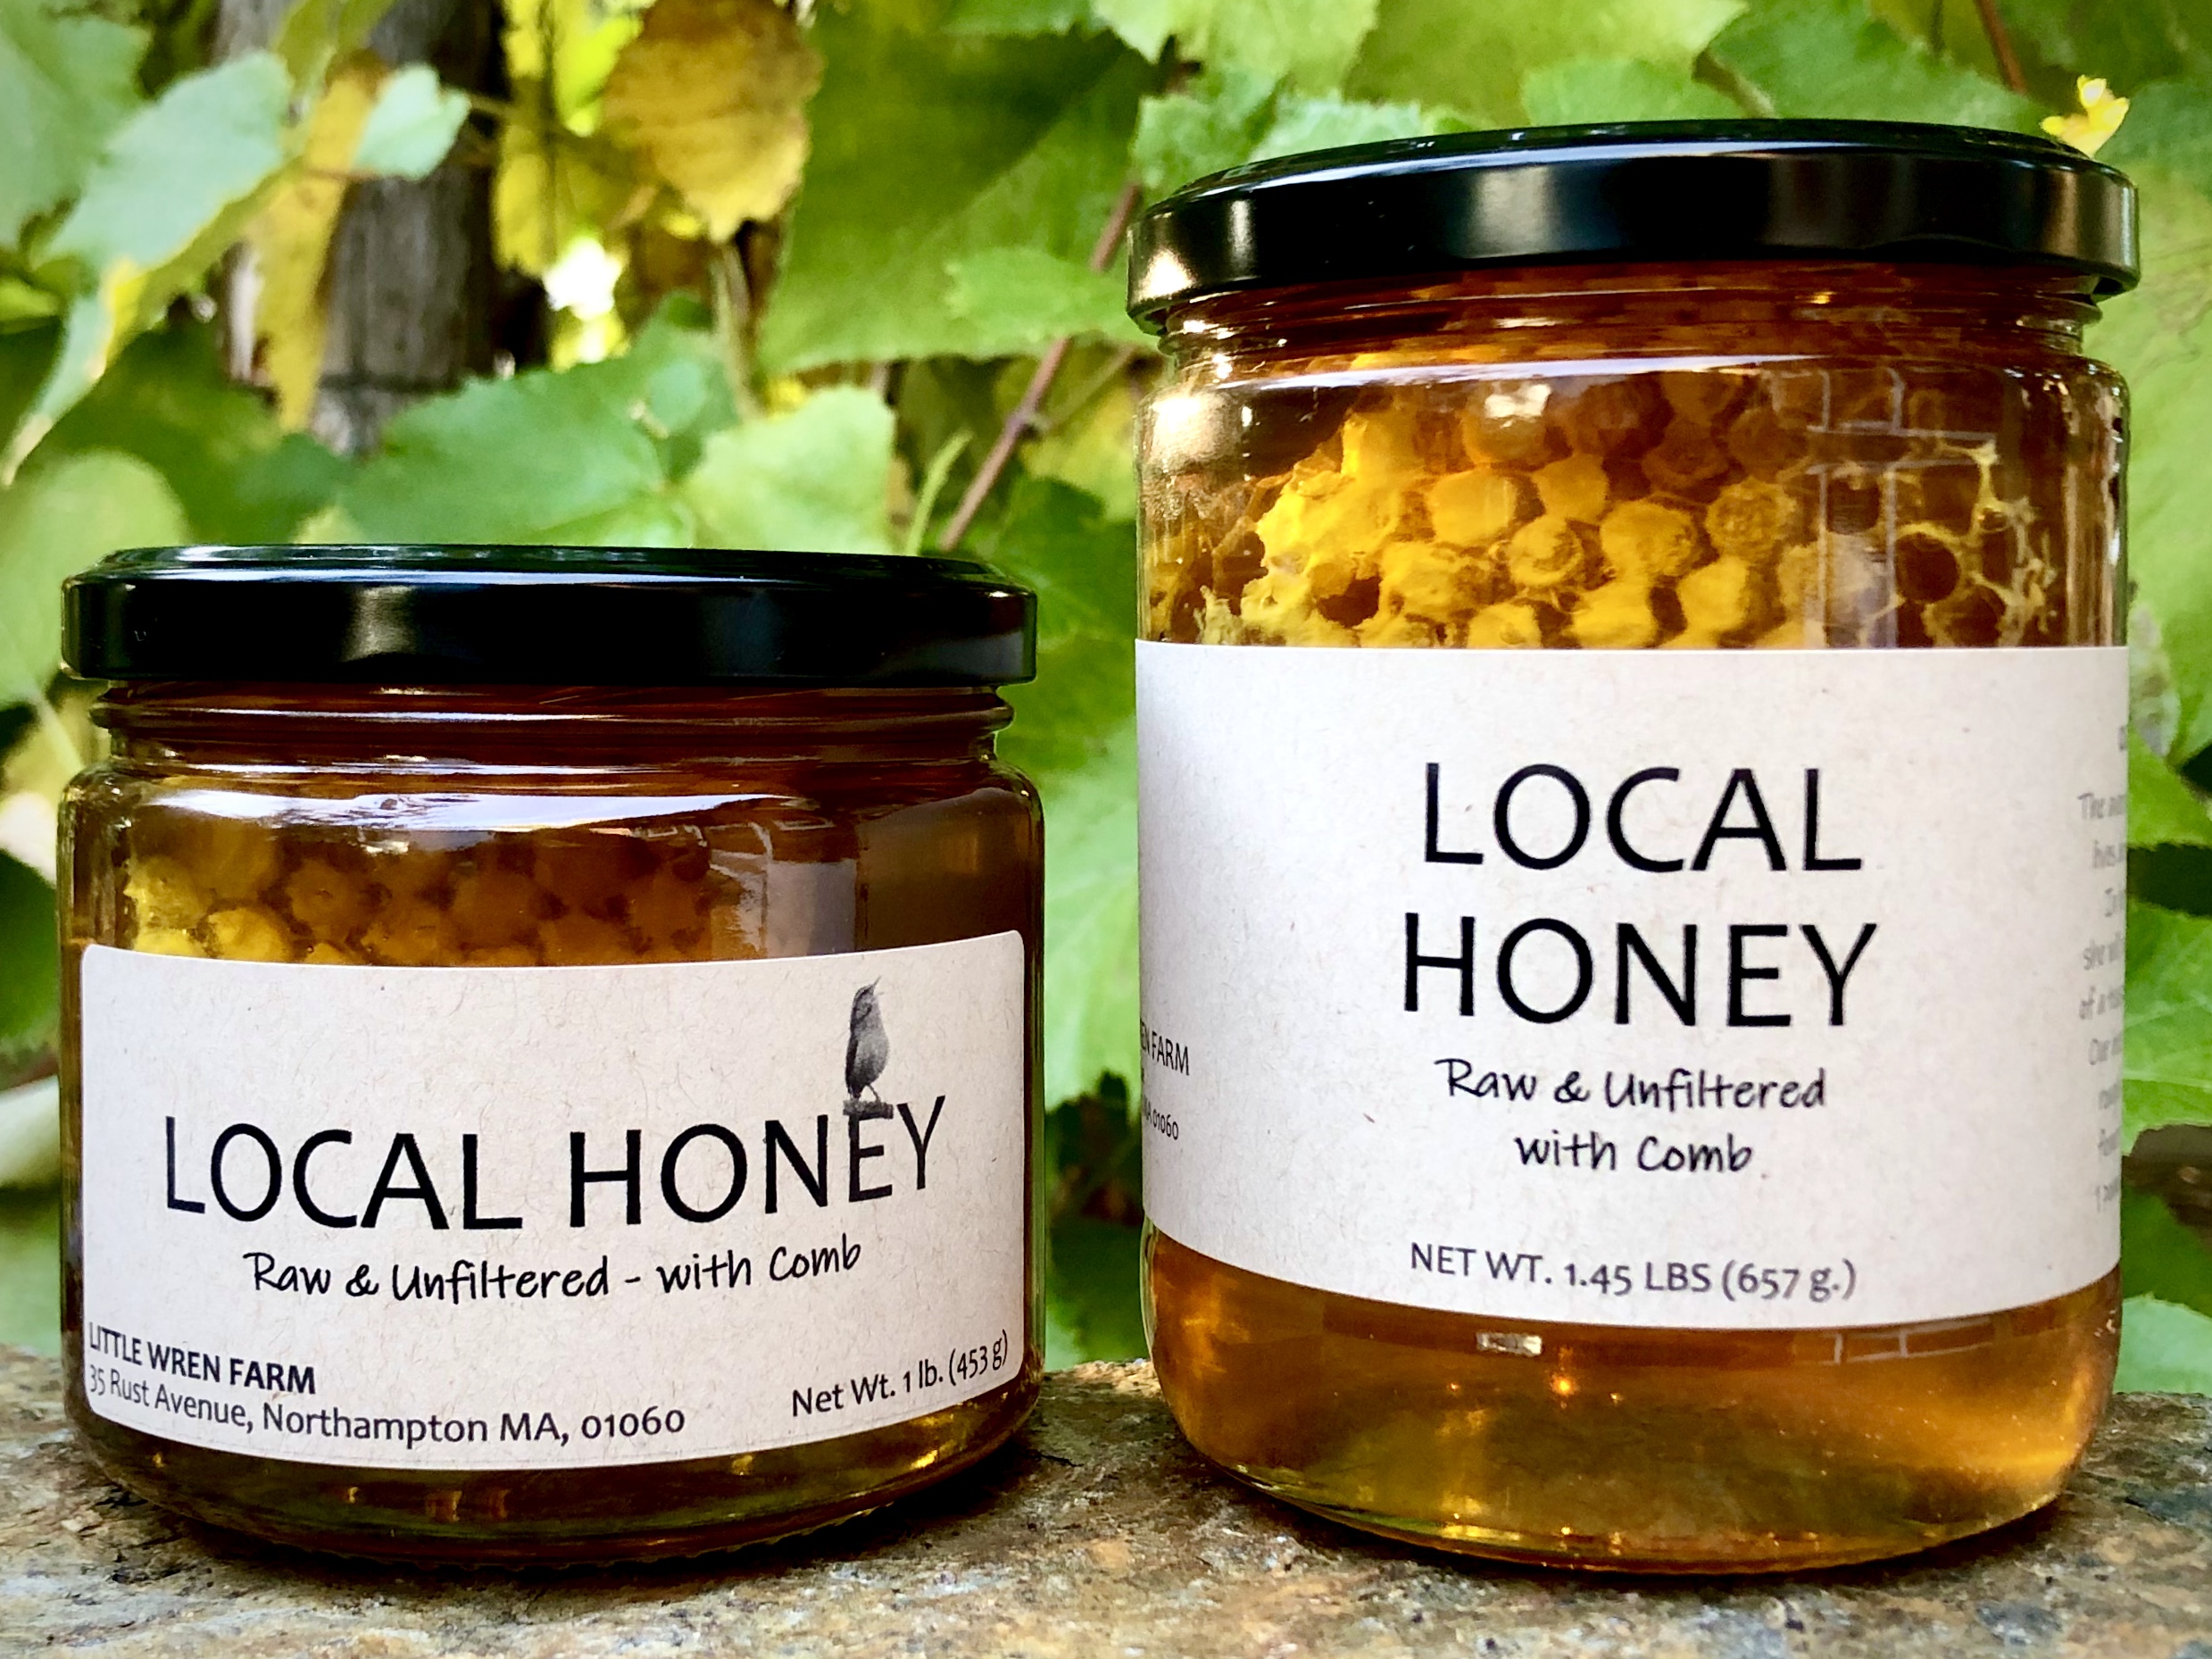 Little Wren Farm Chunk Honey